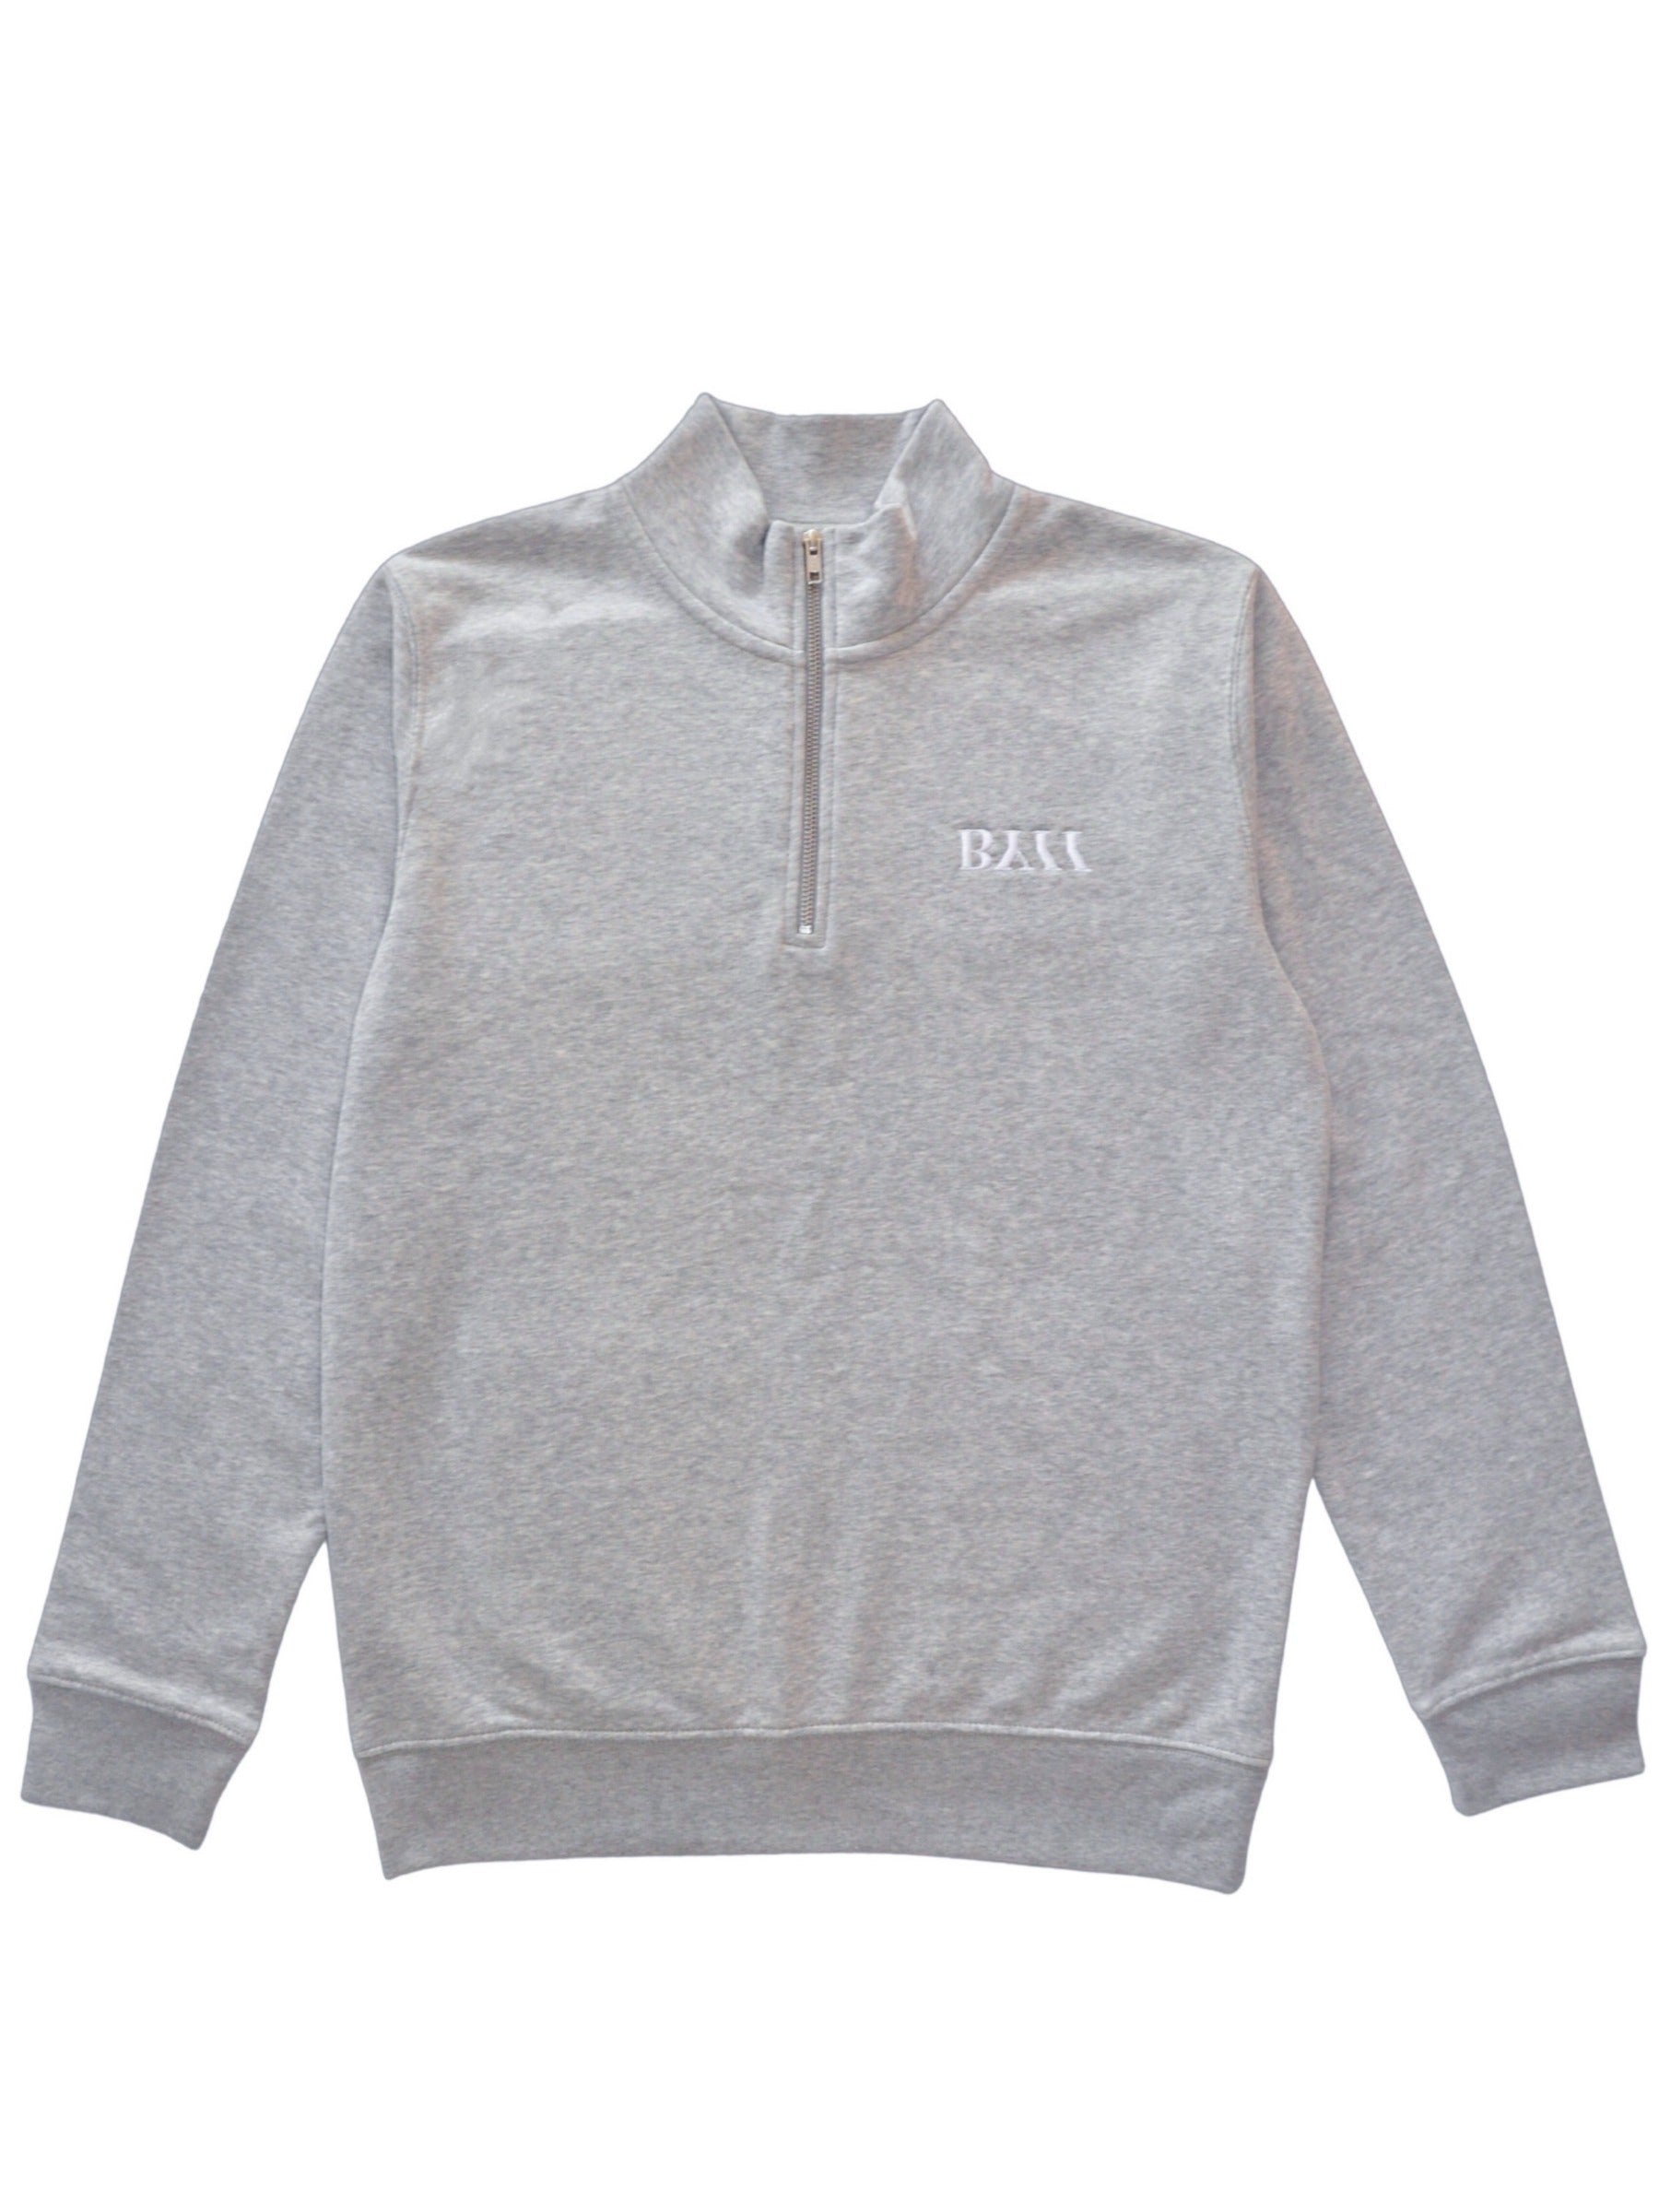 BY11 Half Zip Embroidered Logo Unisex Sweatshirt - Grey